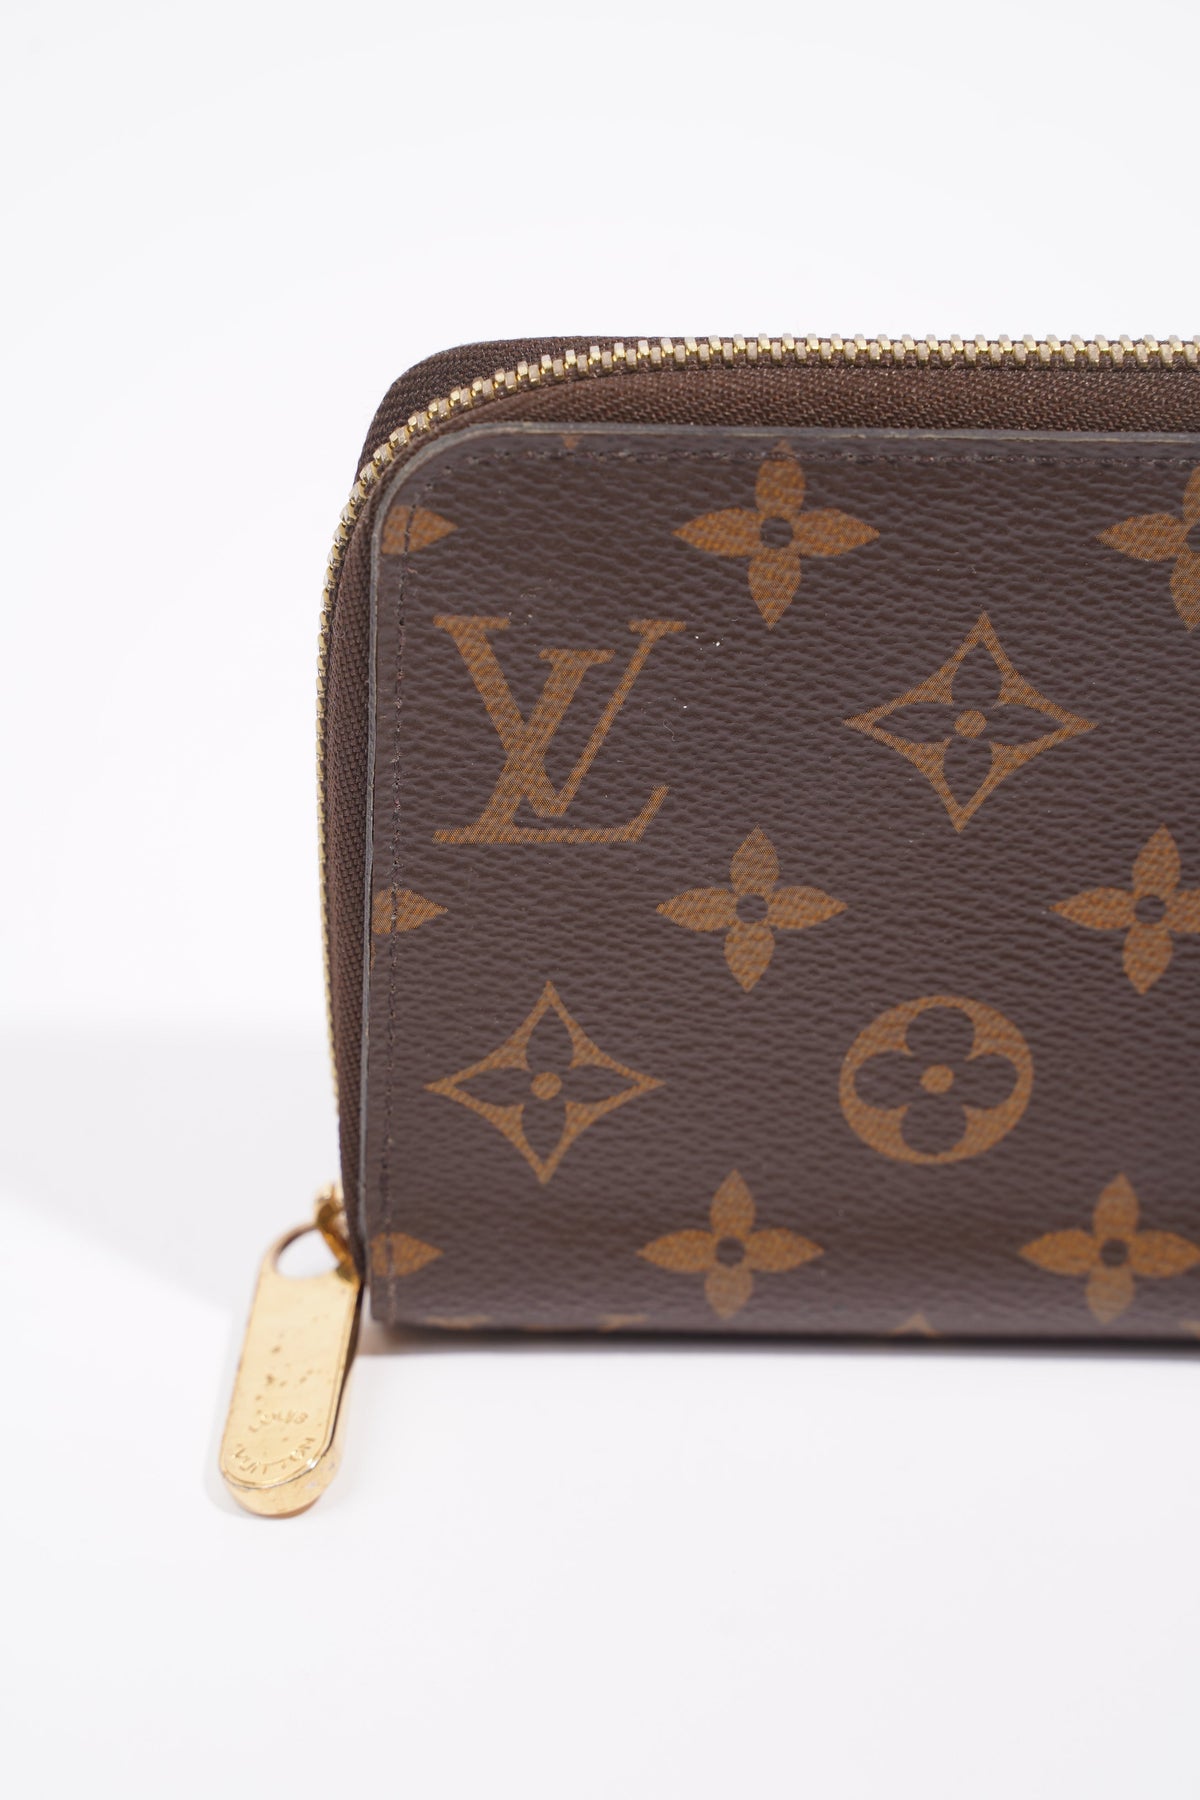 Louie Vuitton zippy wallet  Louie vuitton, Vuitton, Louis vuitton